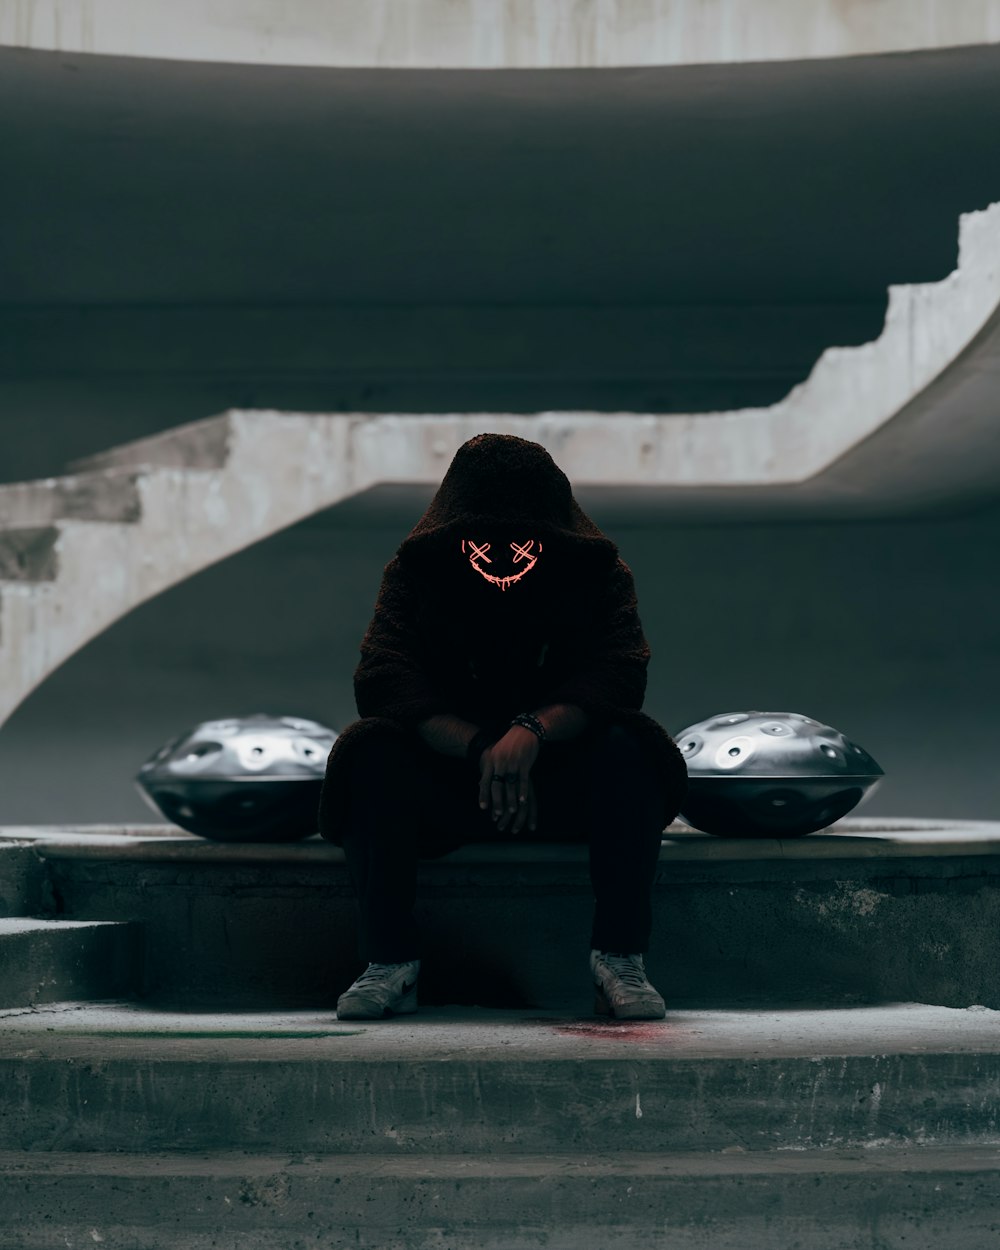 una persona seduta su una sporgenza con una maschera al neon